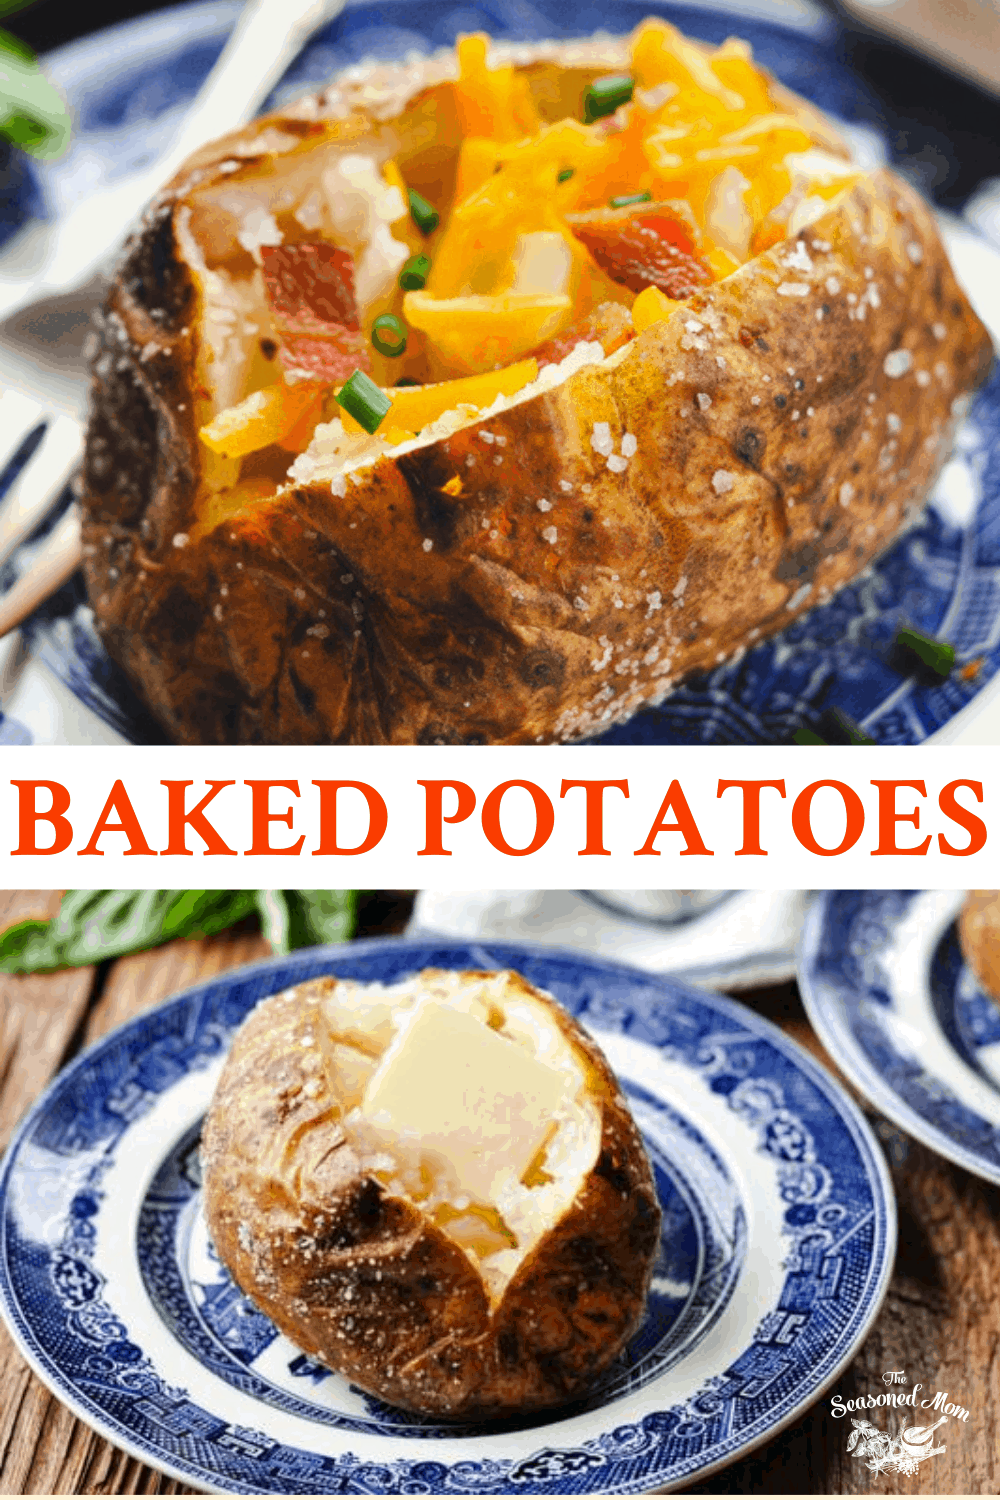 How to Make Baked Potatoes - The Seasoned Mom